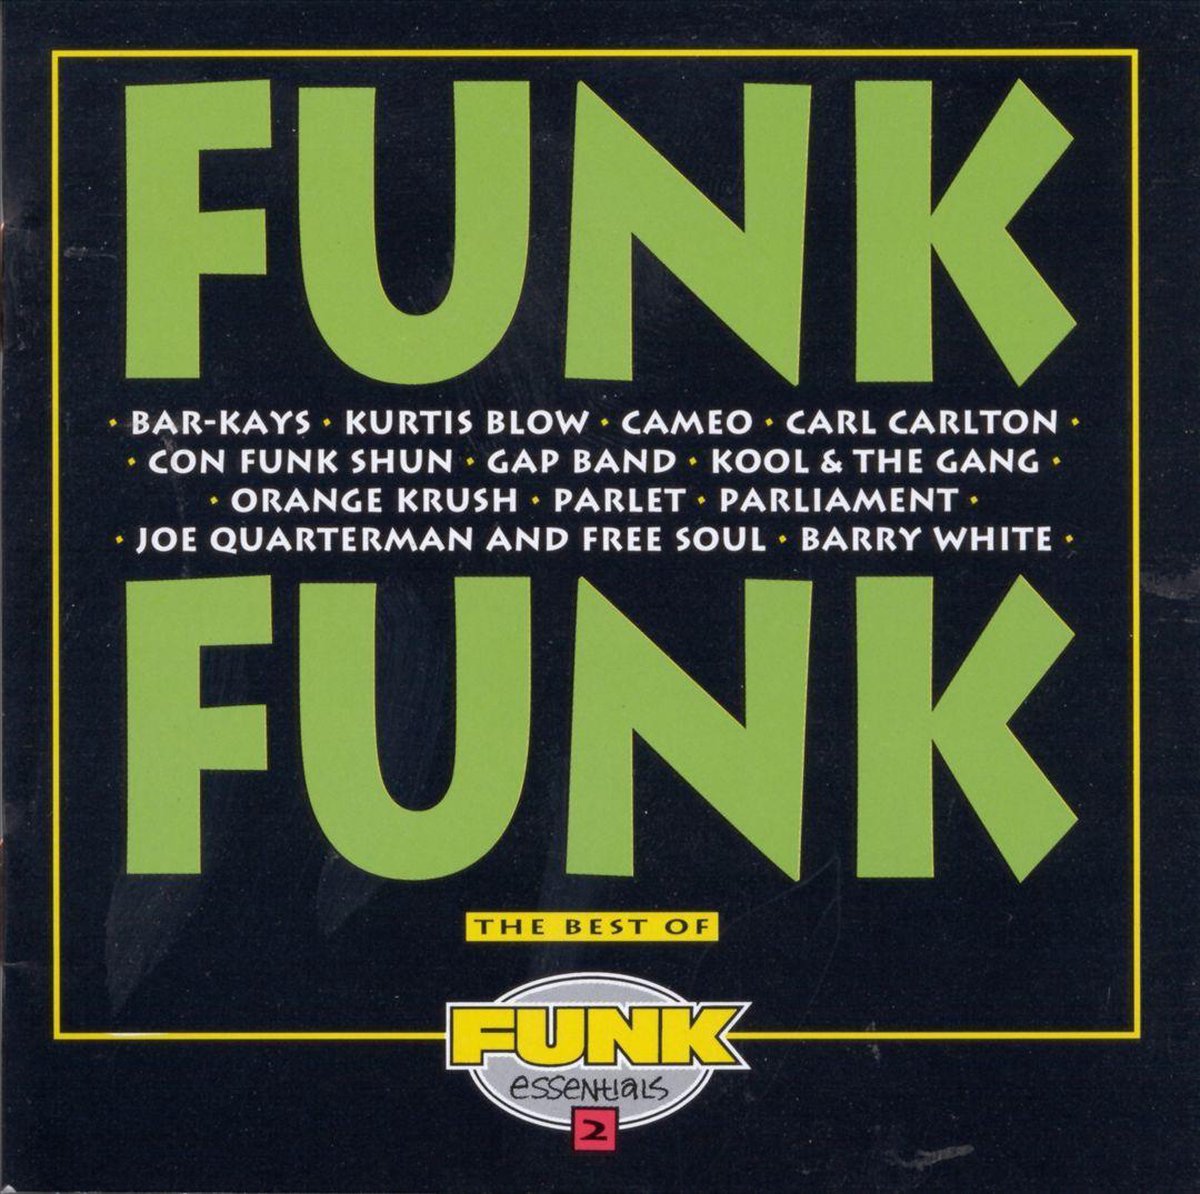 Funk Funk: The Best of Funk Essentials, Vol. 2 - various artists